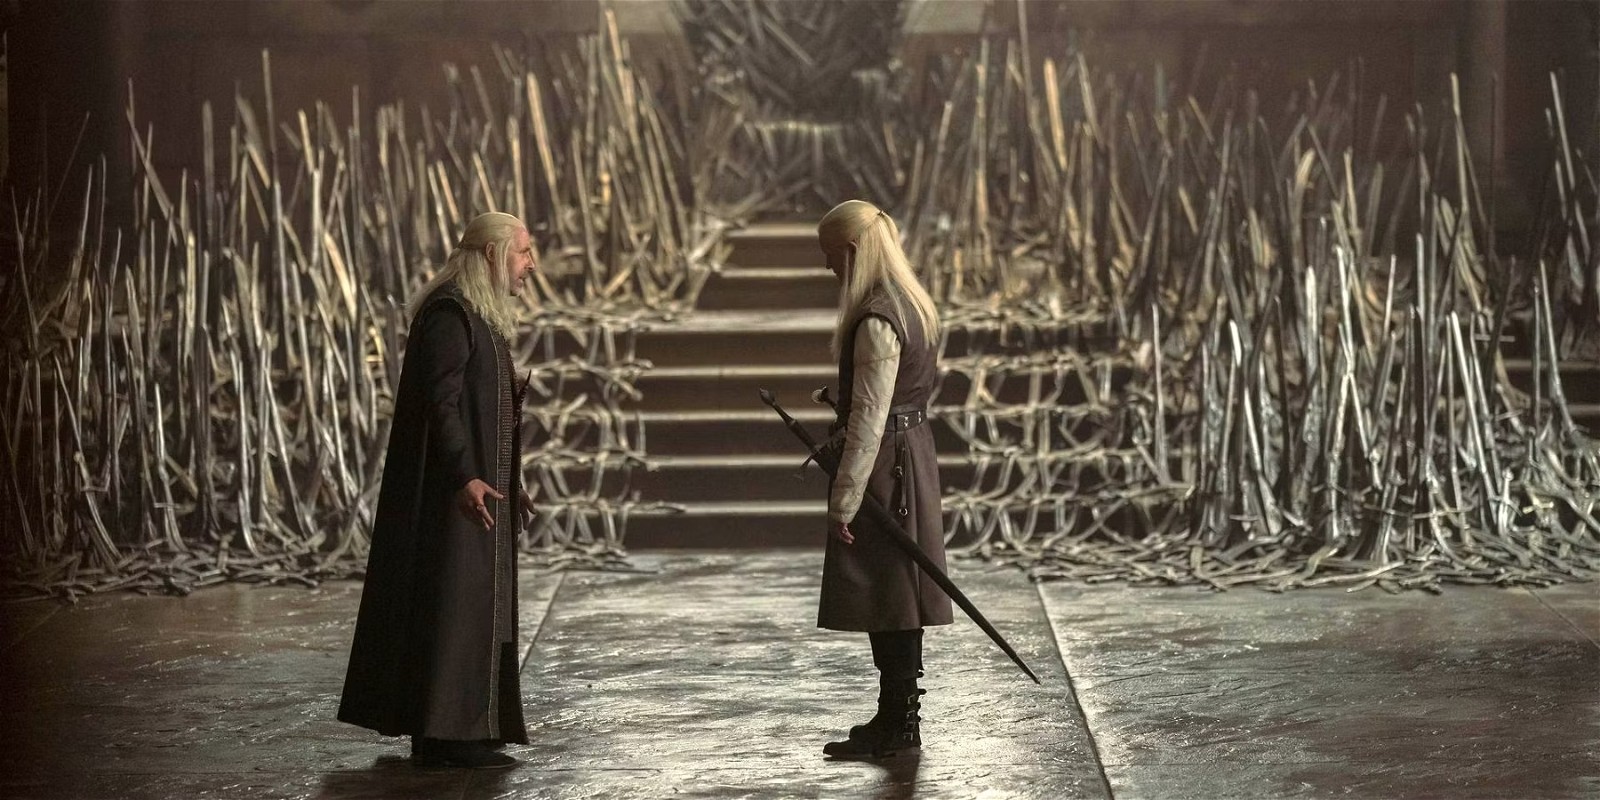 Viserys (Paddy Considine) and Daemon Targaryen (Matt Smith) have a heated discussion.